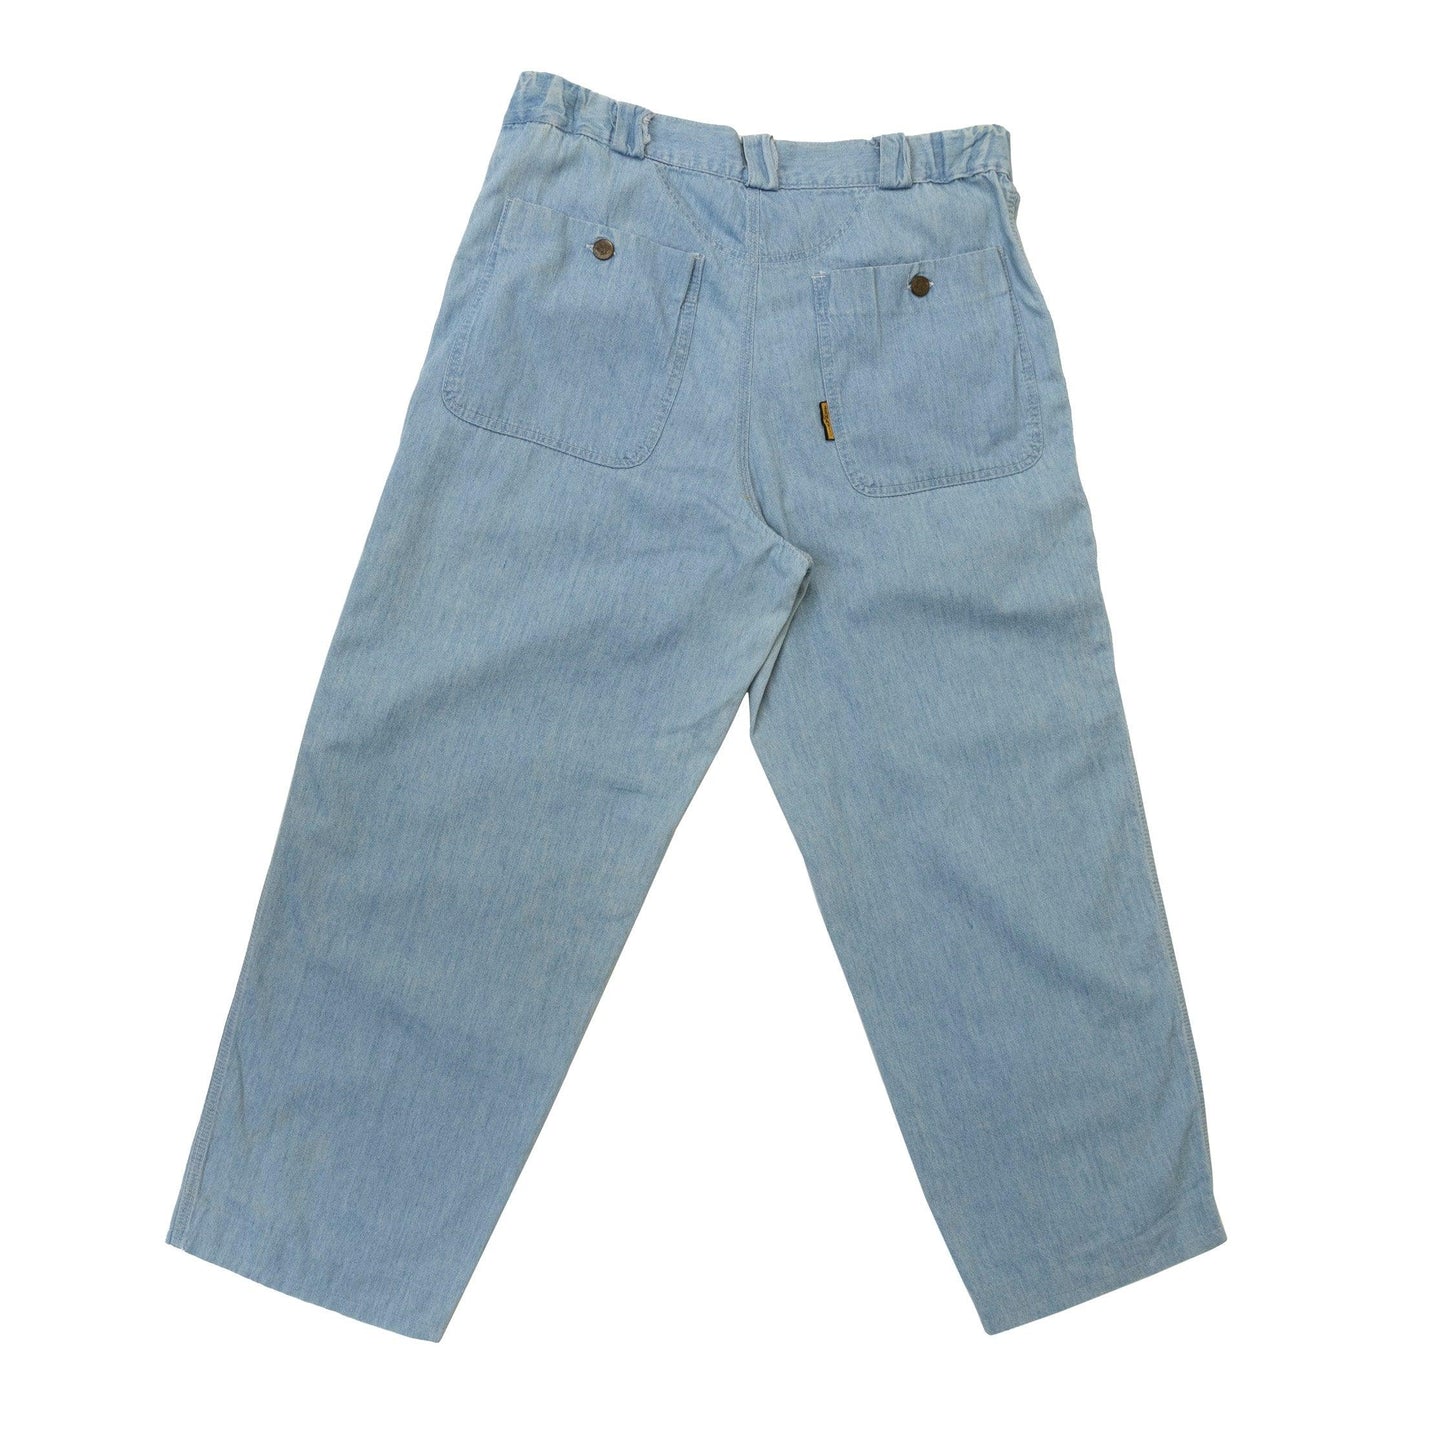 1980s Emporio Armani Light Wash Denim Jeans - Known Source